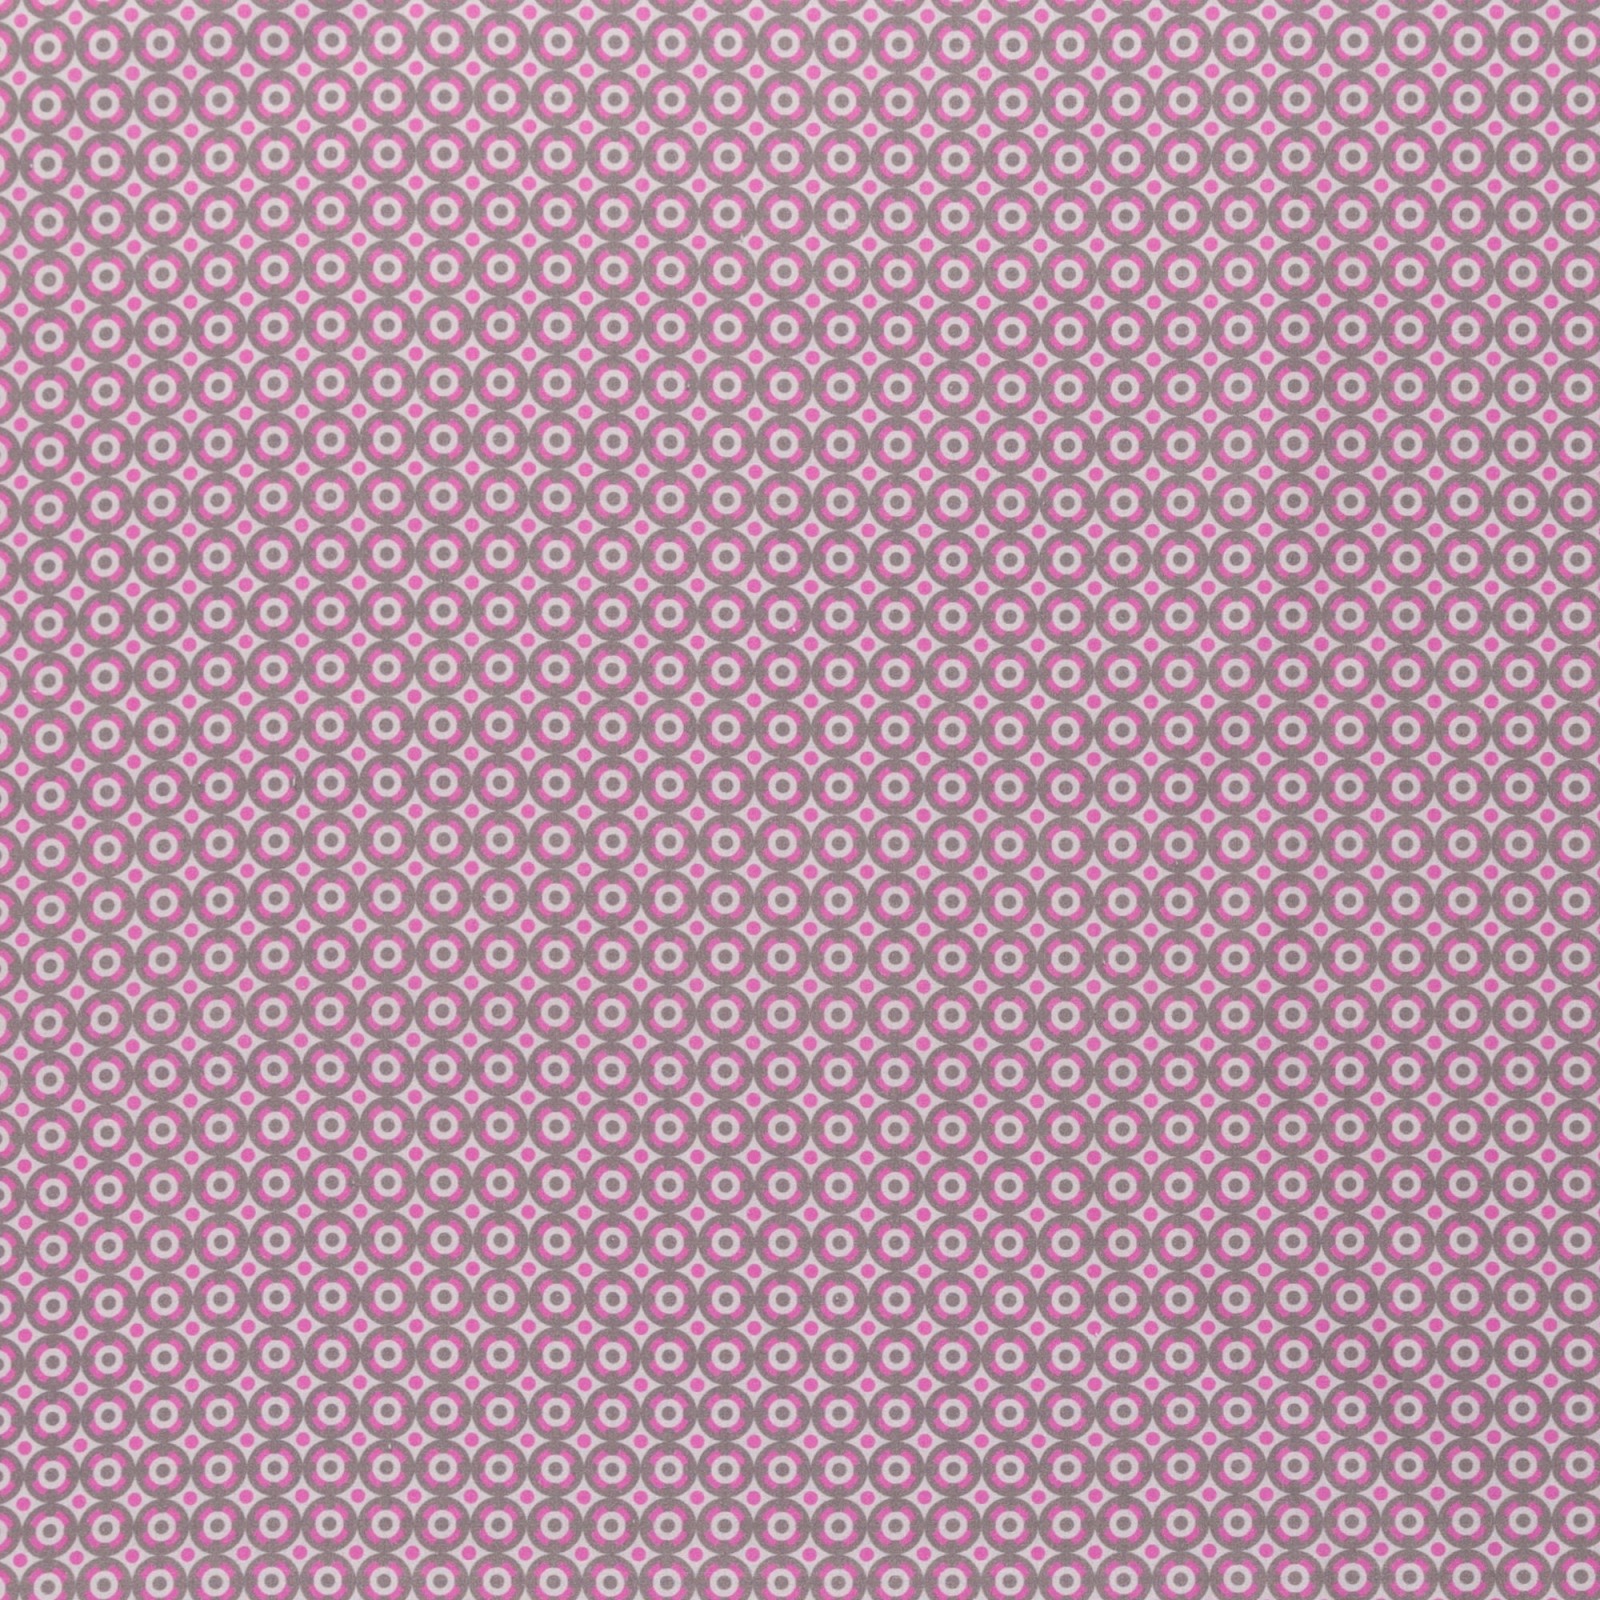 Baumwollstoff JASMIN | Kreise | pink-grau 3